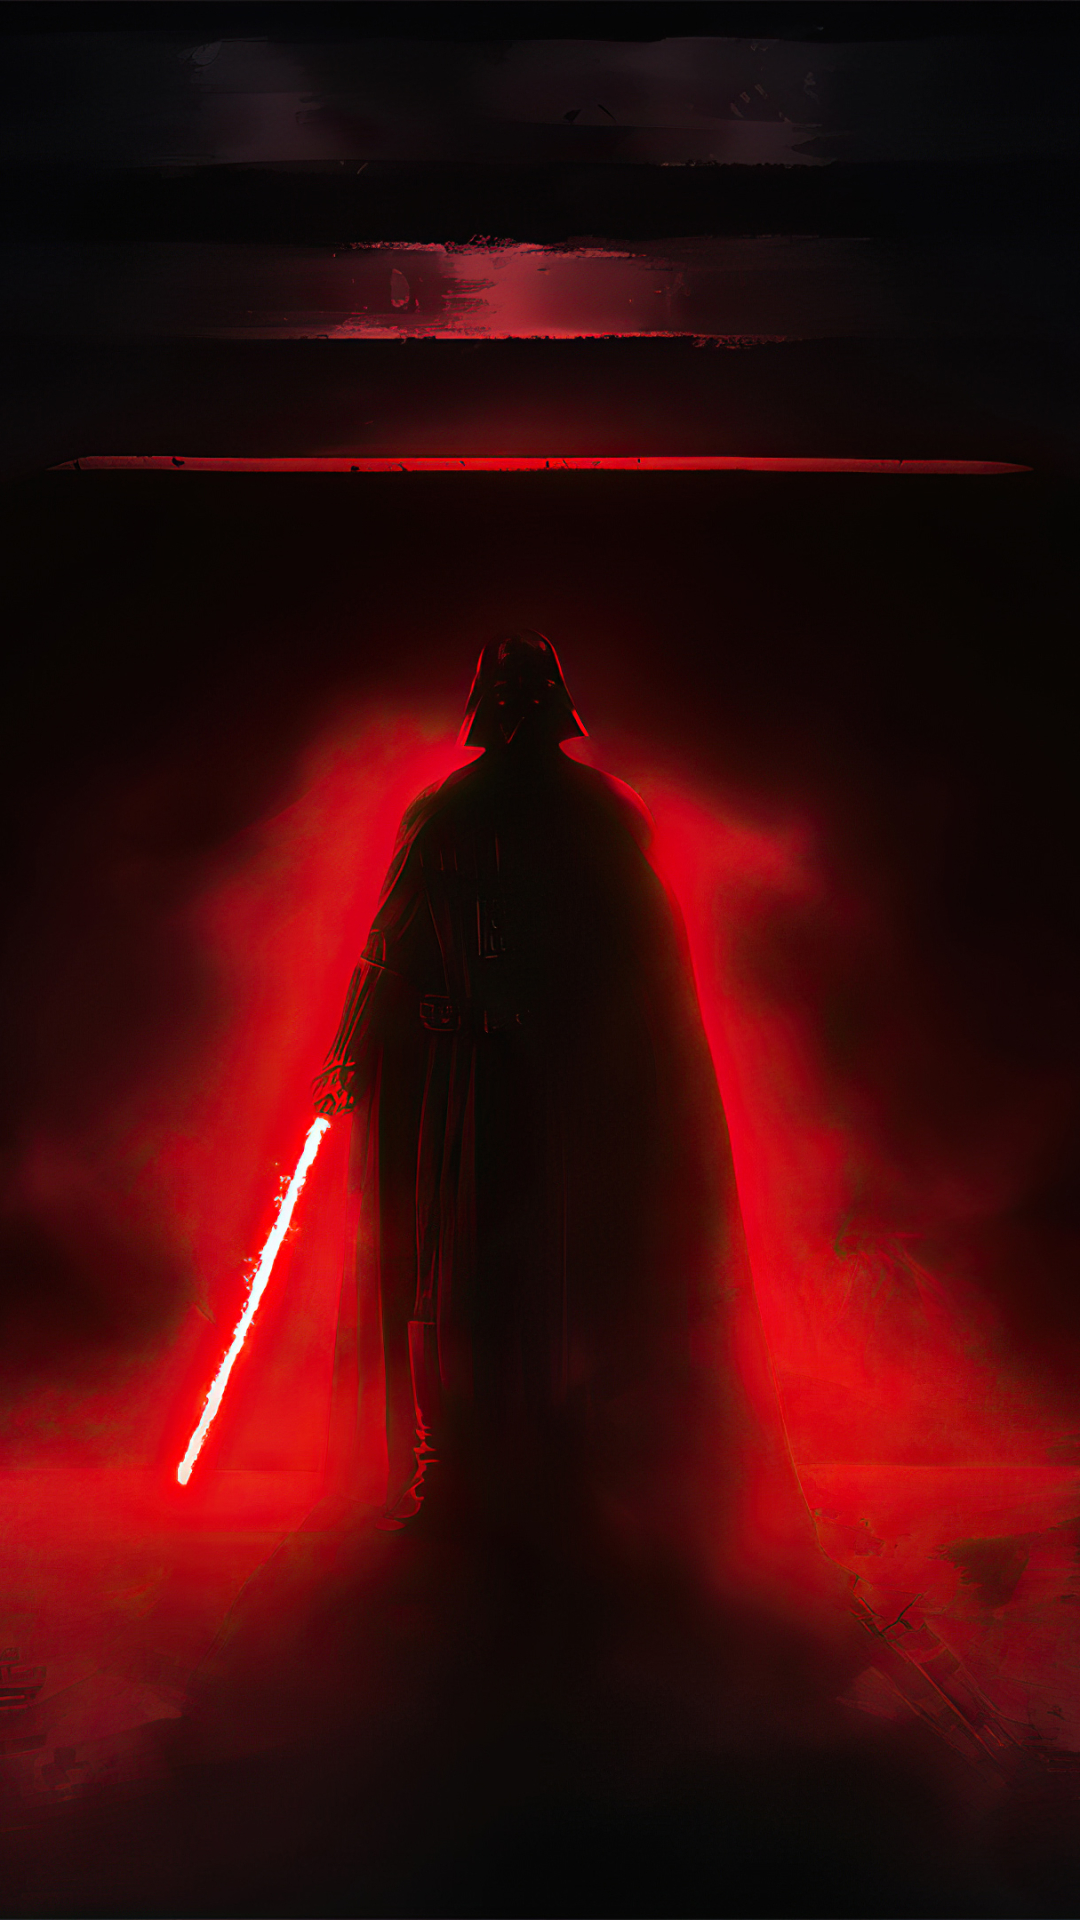 Star Wars Darth Vader Wallpaper Background, Cool Darth Vader Pictures  Background Image And Wallpaper for Free Download